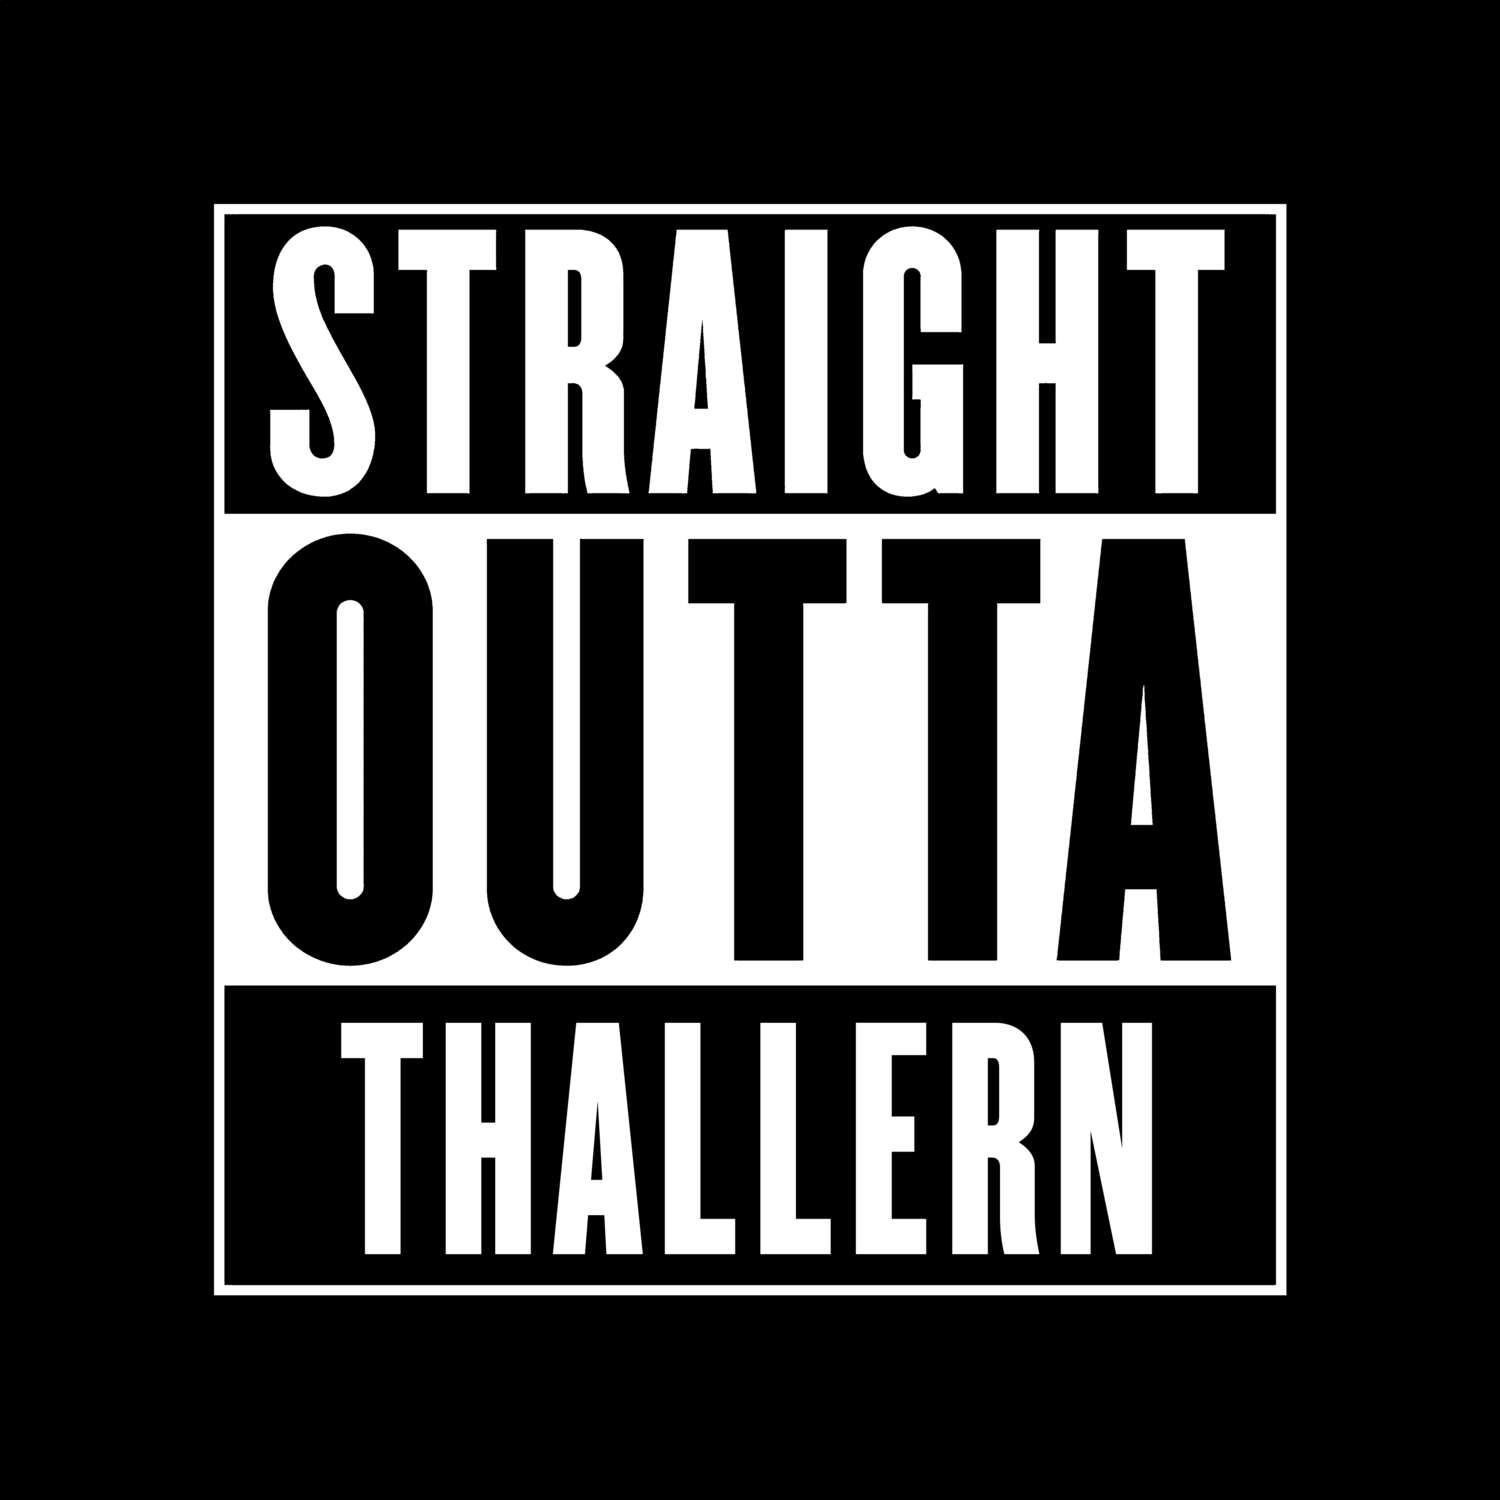 Thallern T-Shirt »Straight Outta«